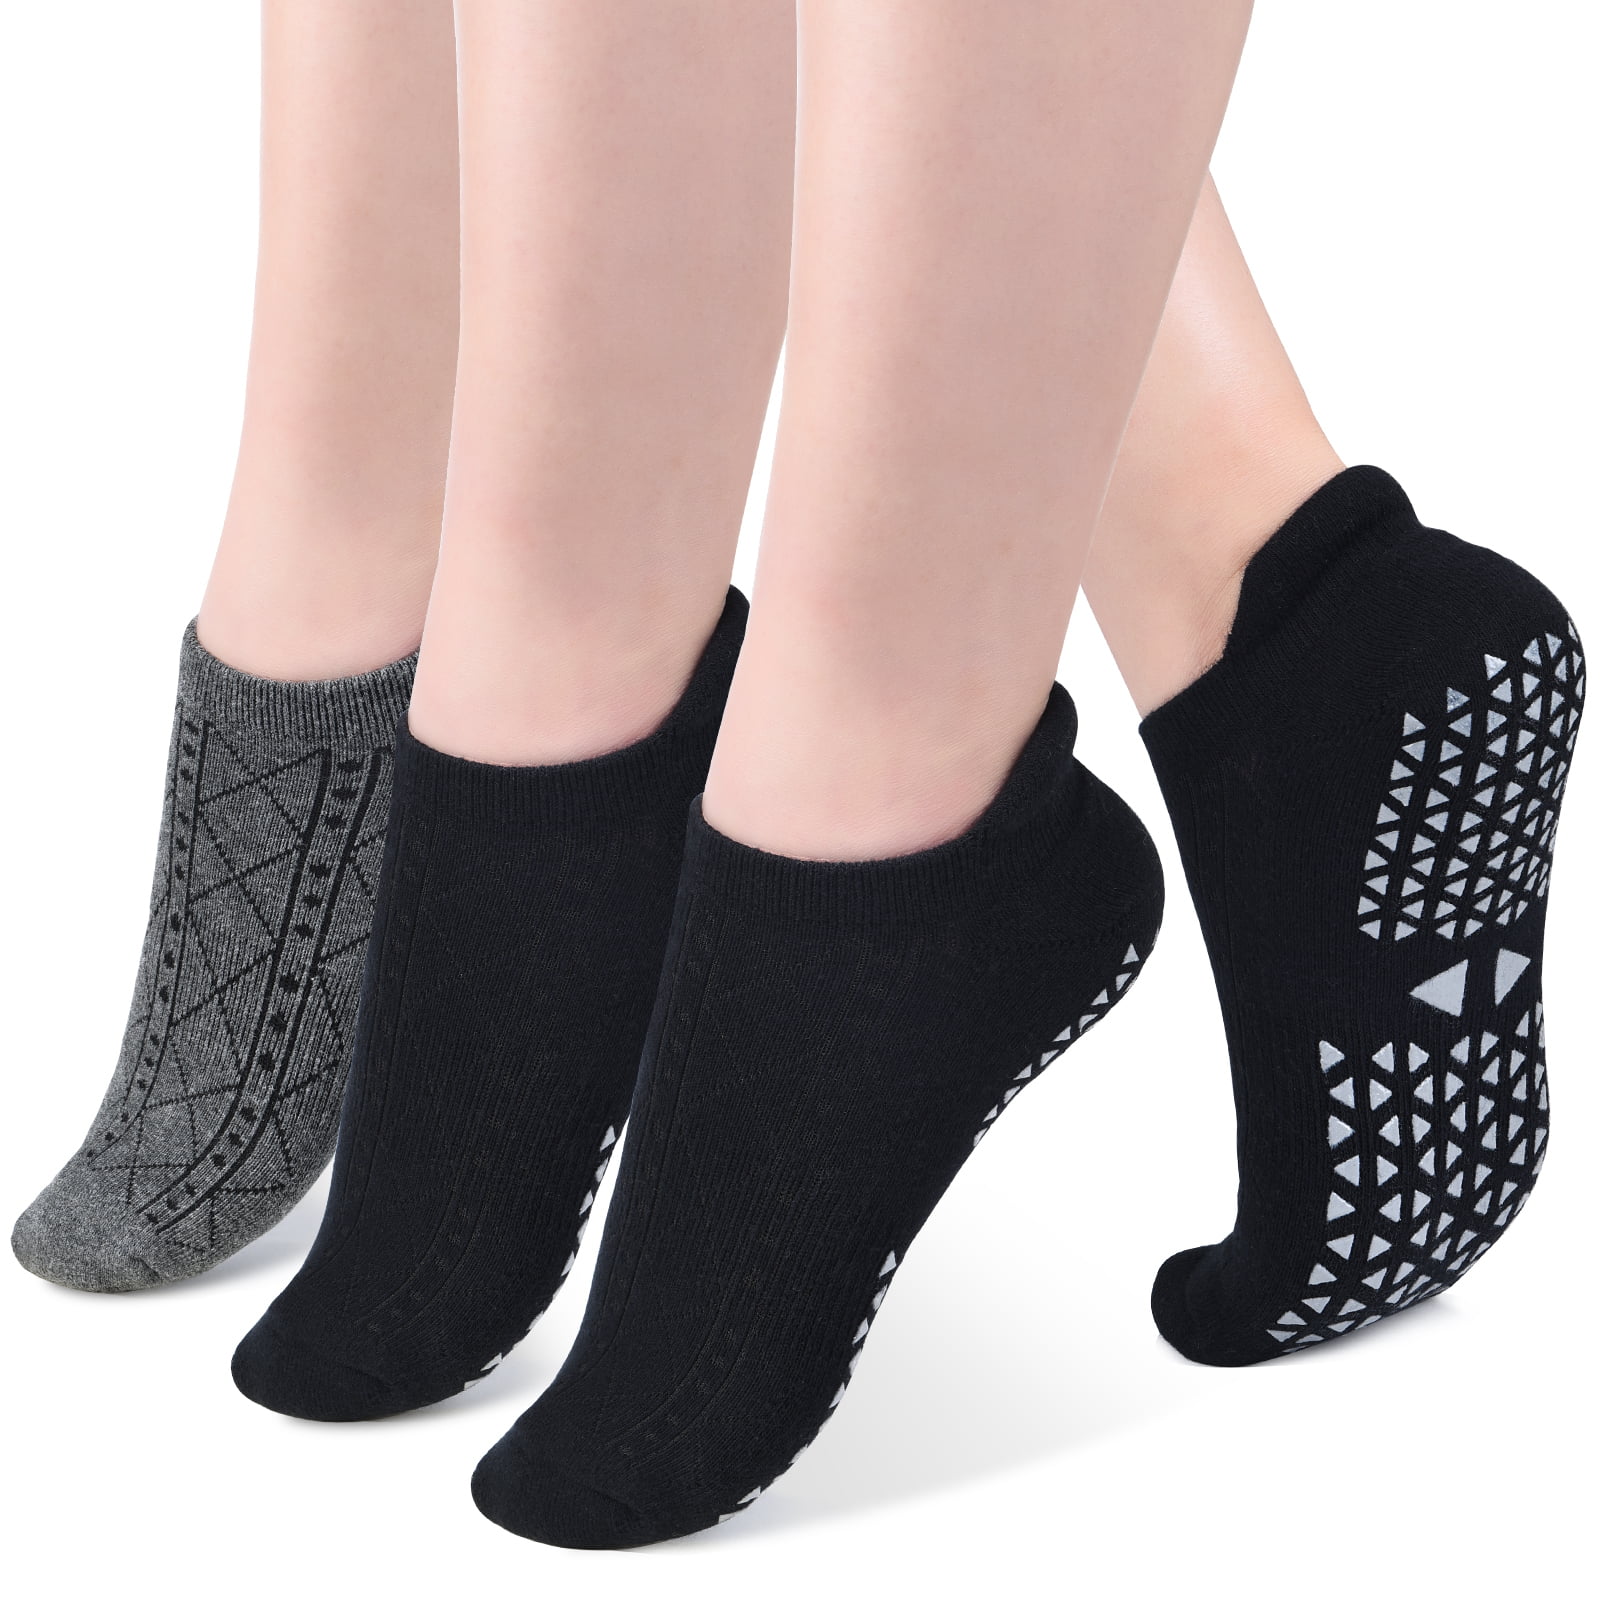 Professional Non Slip Cotton Yoga Socks Dance Ballet Women's Sports Toe Socks 